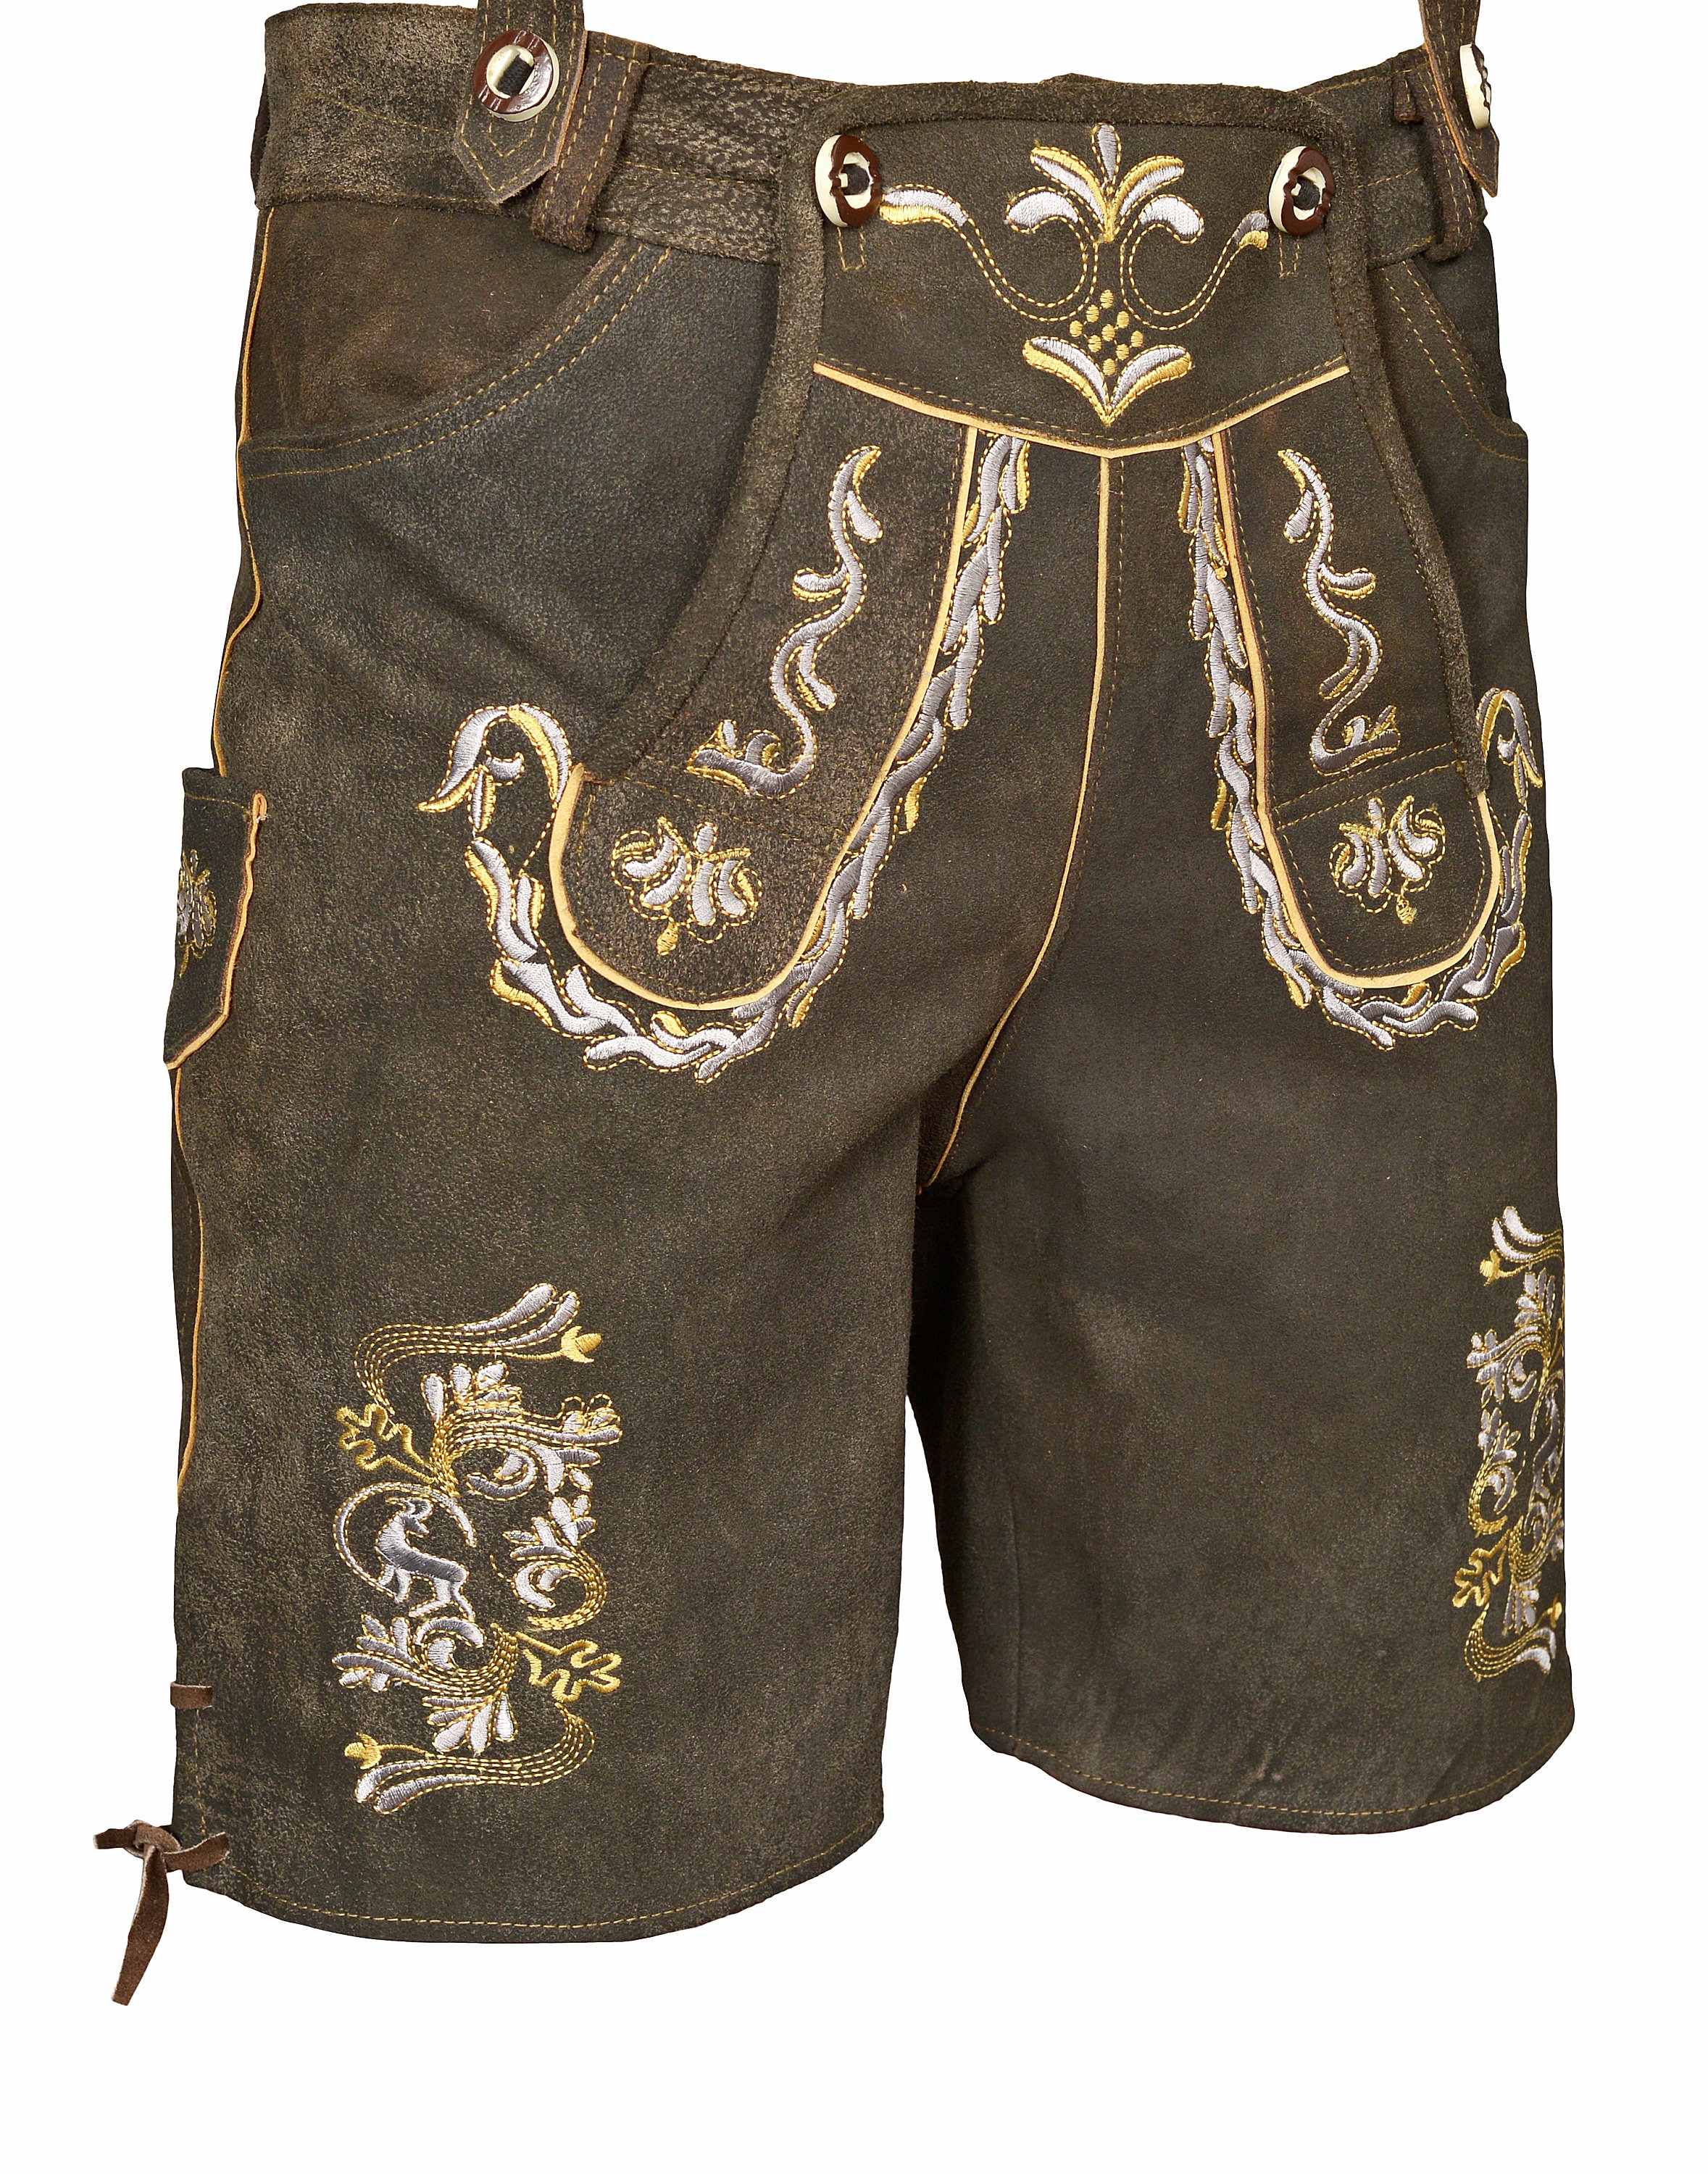 Bavarian leather trousers stock photo Image of clothing  15609788